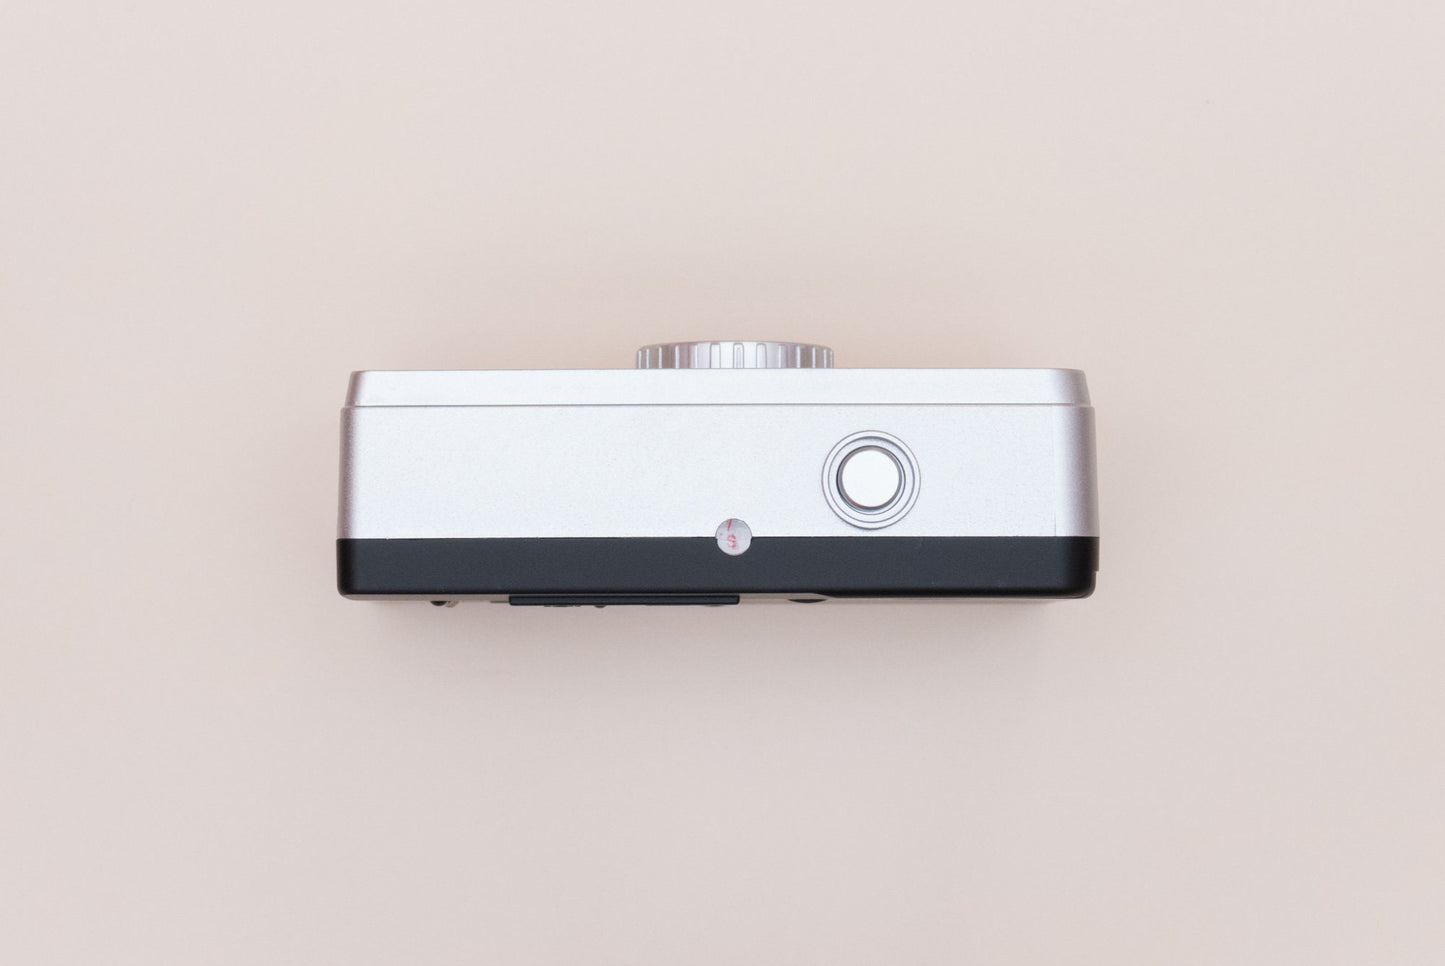 KODAK Ektar H35 Half-Frame Analog 35mm Reusable Film Camera Sand